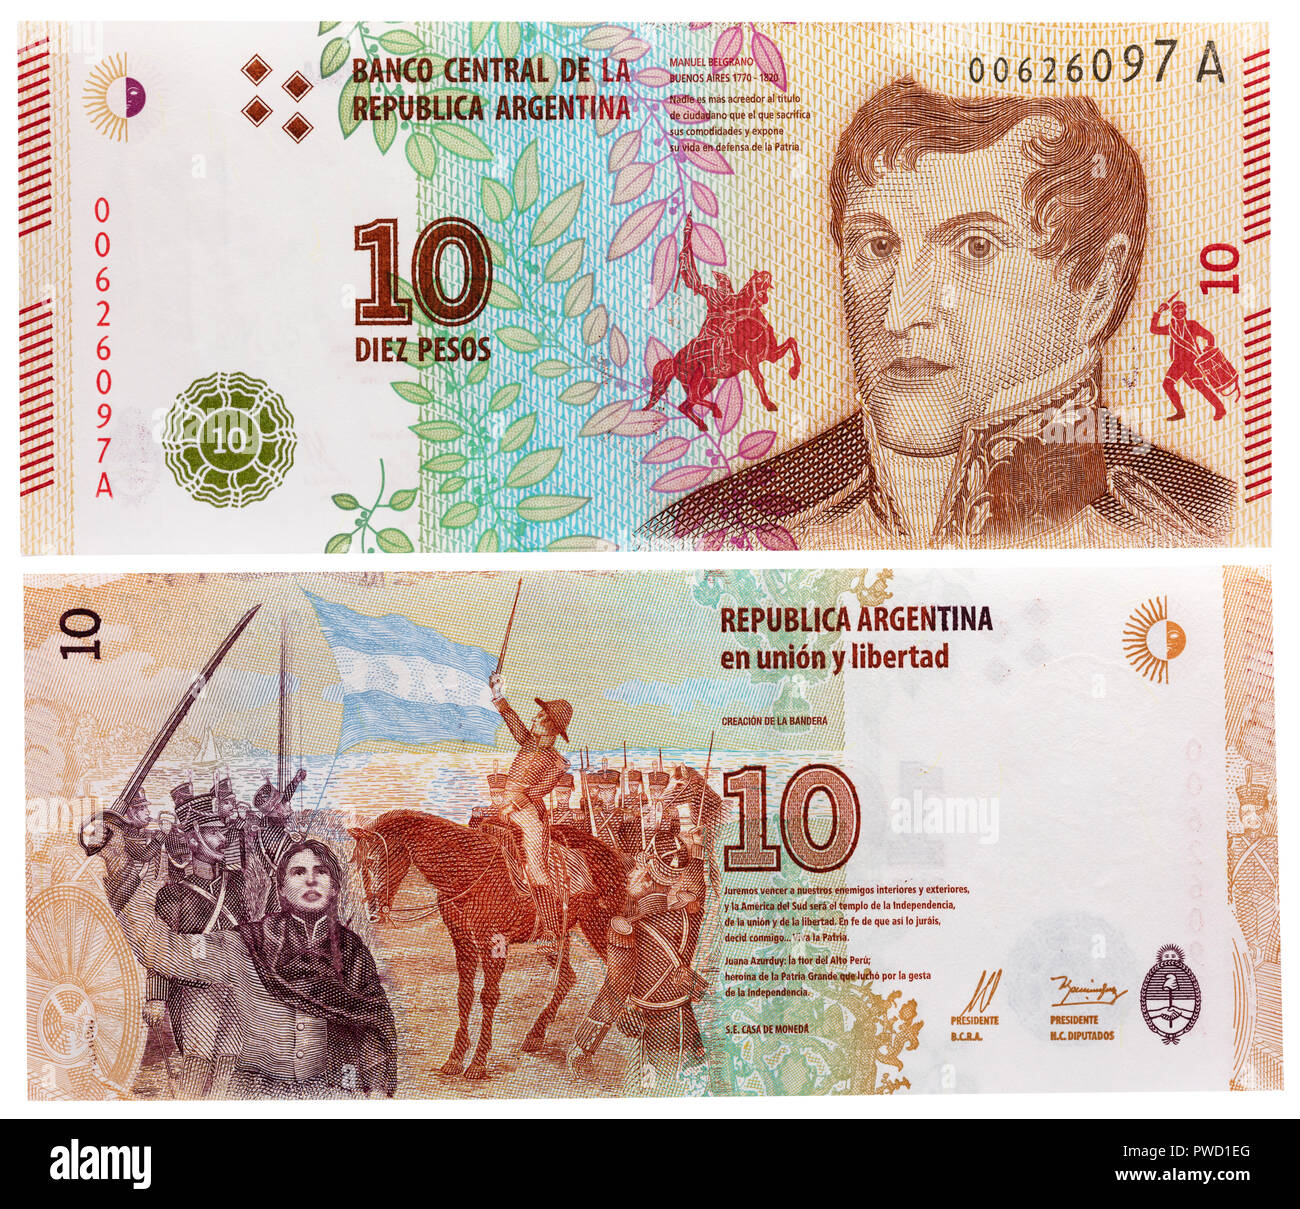 https://c8.alamy.com/compes/pwd1eg/billete-de-10-pesos-manuel-belgrano-argentina-pwd1eg.jpg